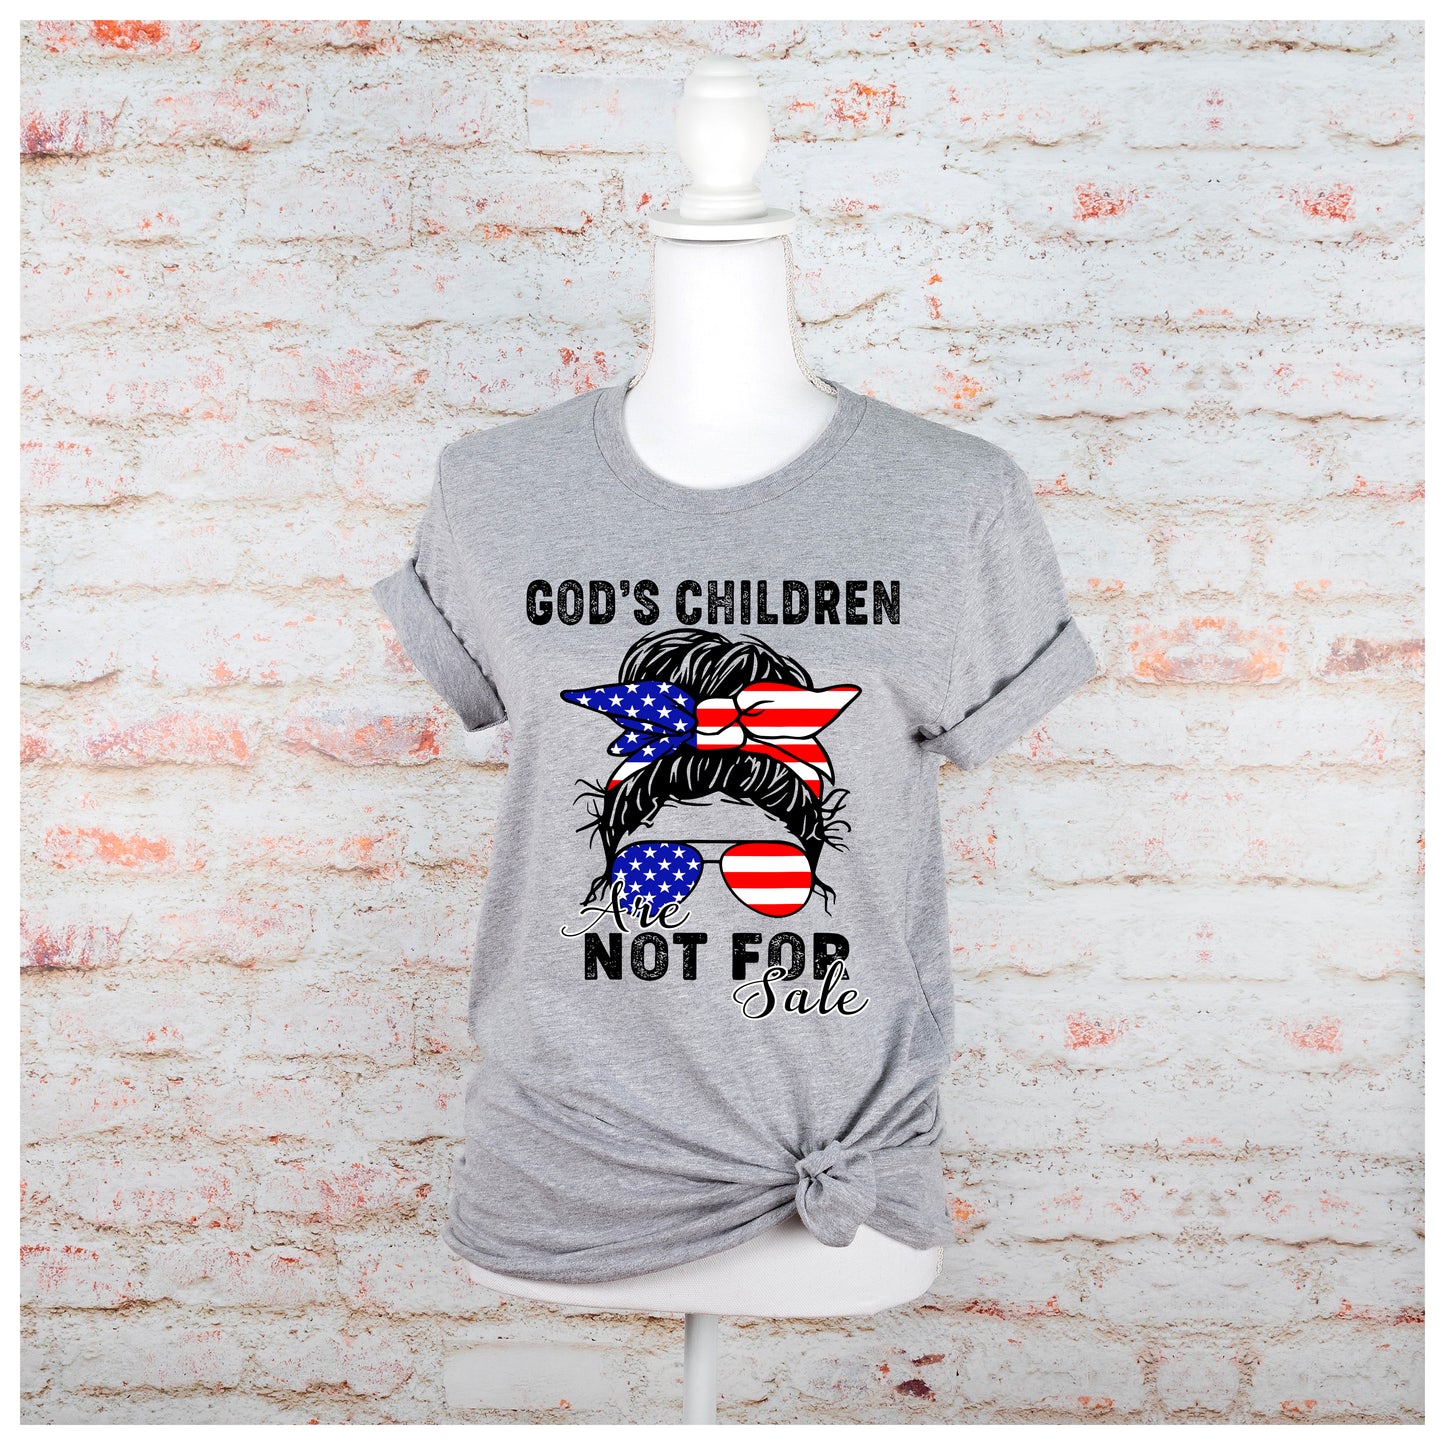 GODS CHILDREN ARE NOT FOR SALE MOM BUN (DTF) 954